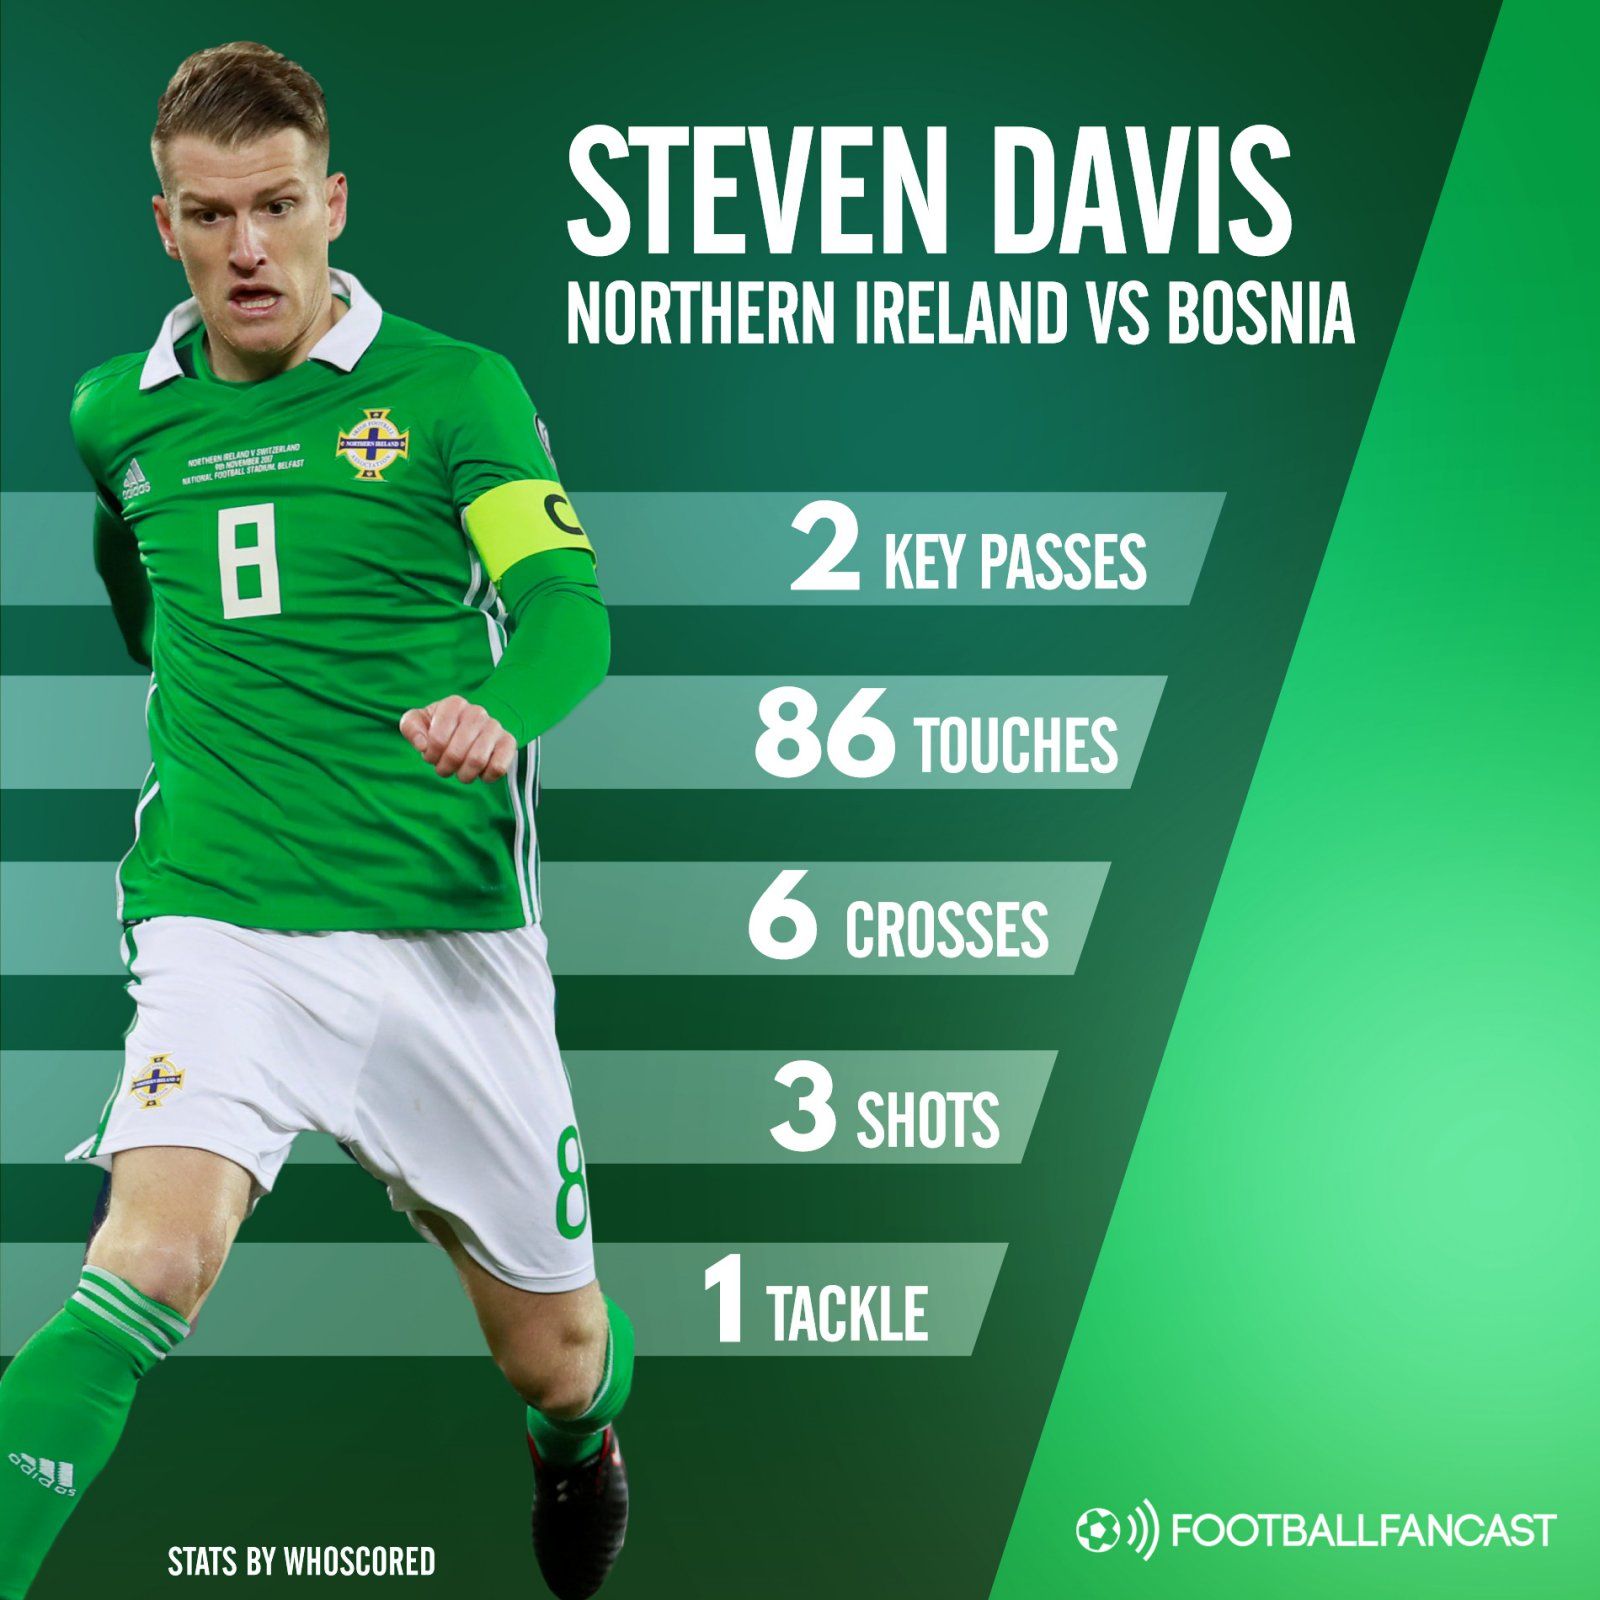 Southampton midfielder Steven Davis' stats for Northern Ireland vs Bosnia